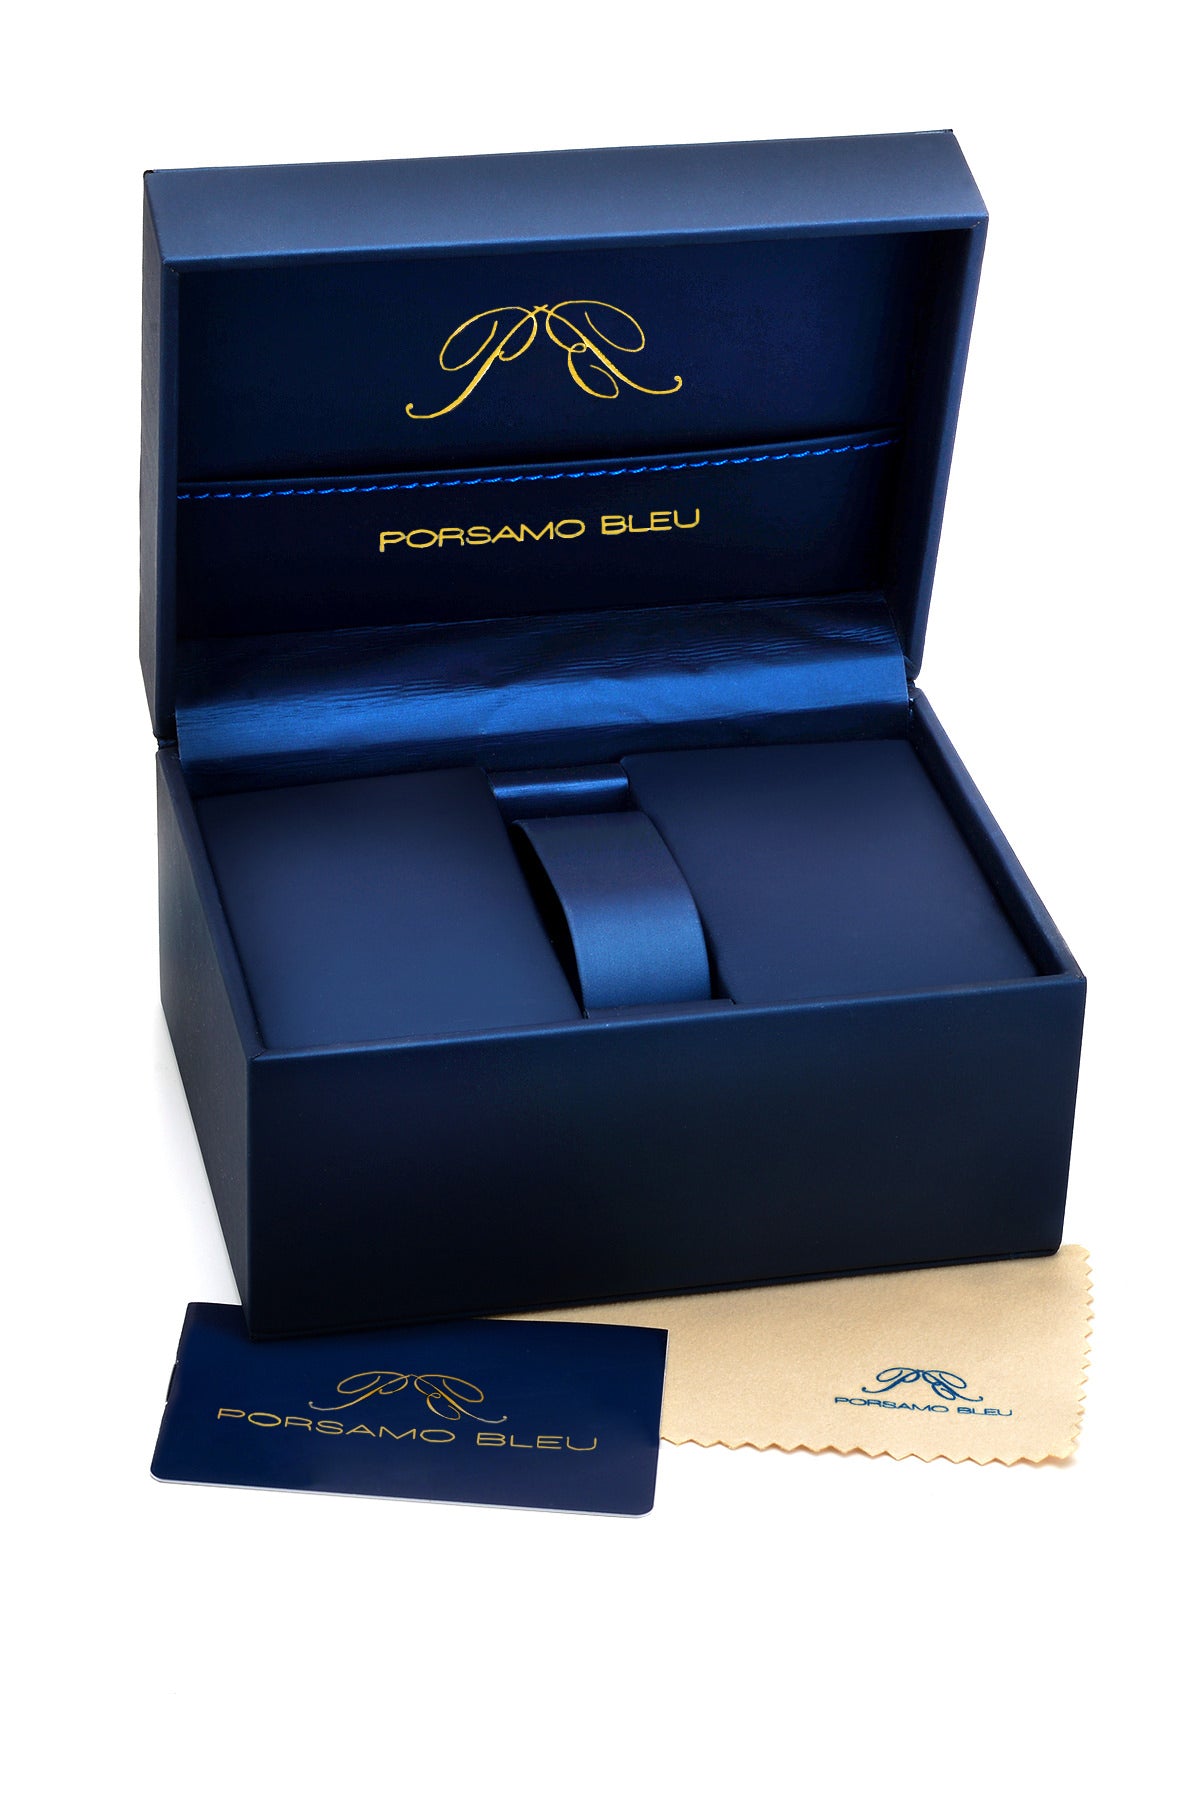 Porsamo Bleu Guilia Luxury Women's Stainless Steel Watch, Interchangeable Band,S Silver, White, Baby Blue 1121BGUS